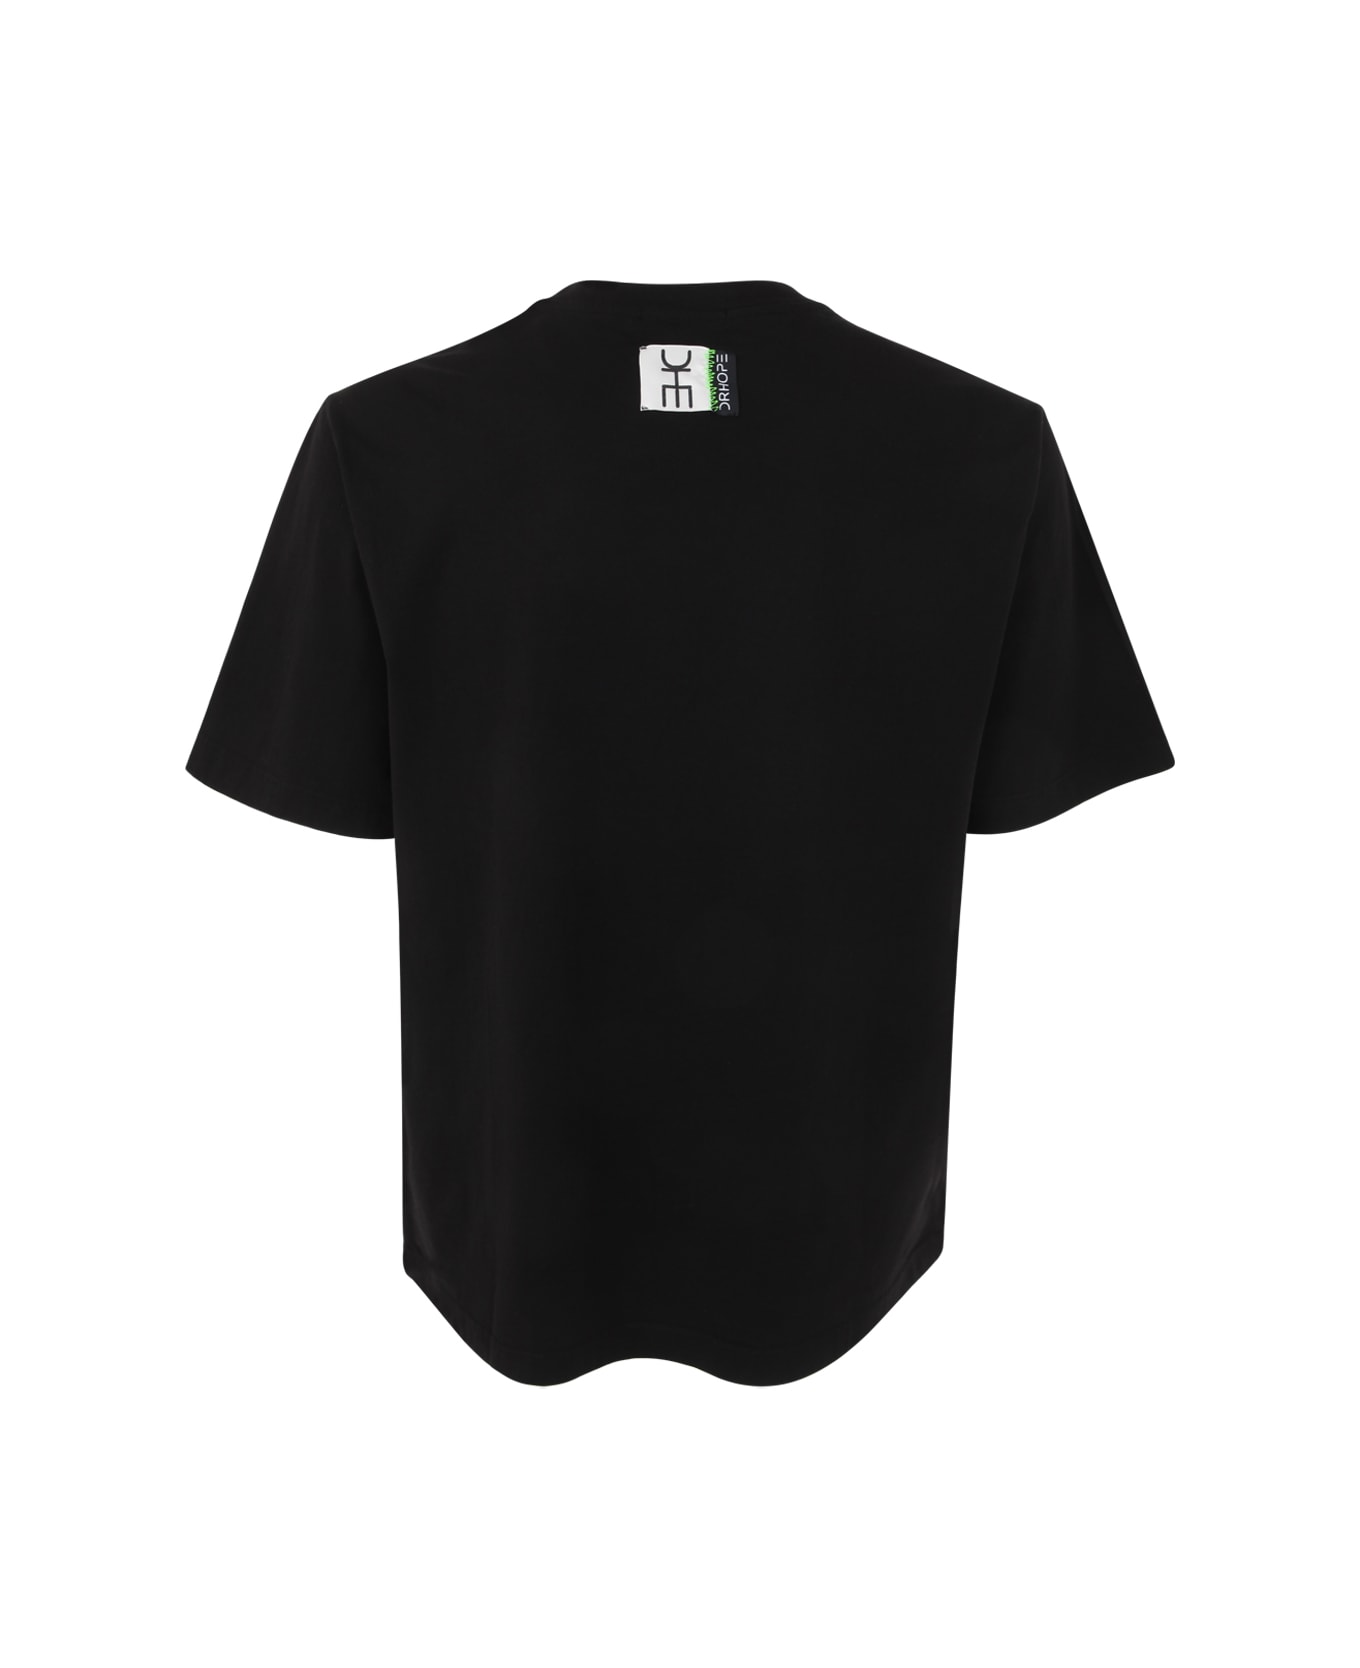 Drhope T-shirt -  Black